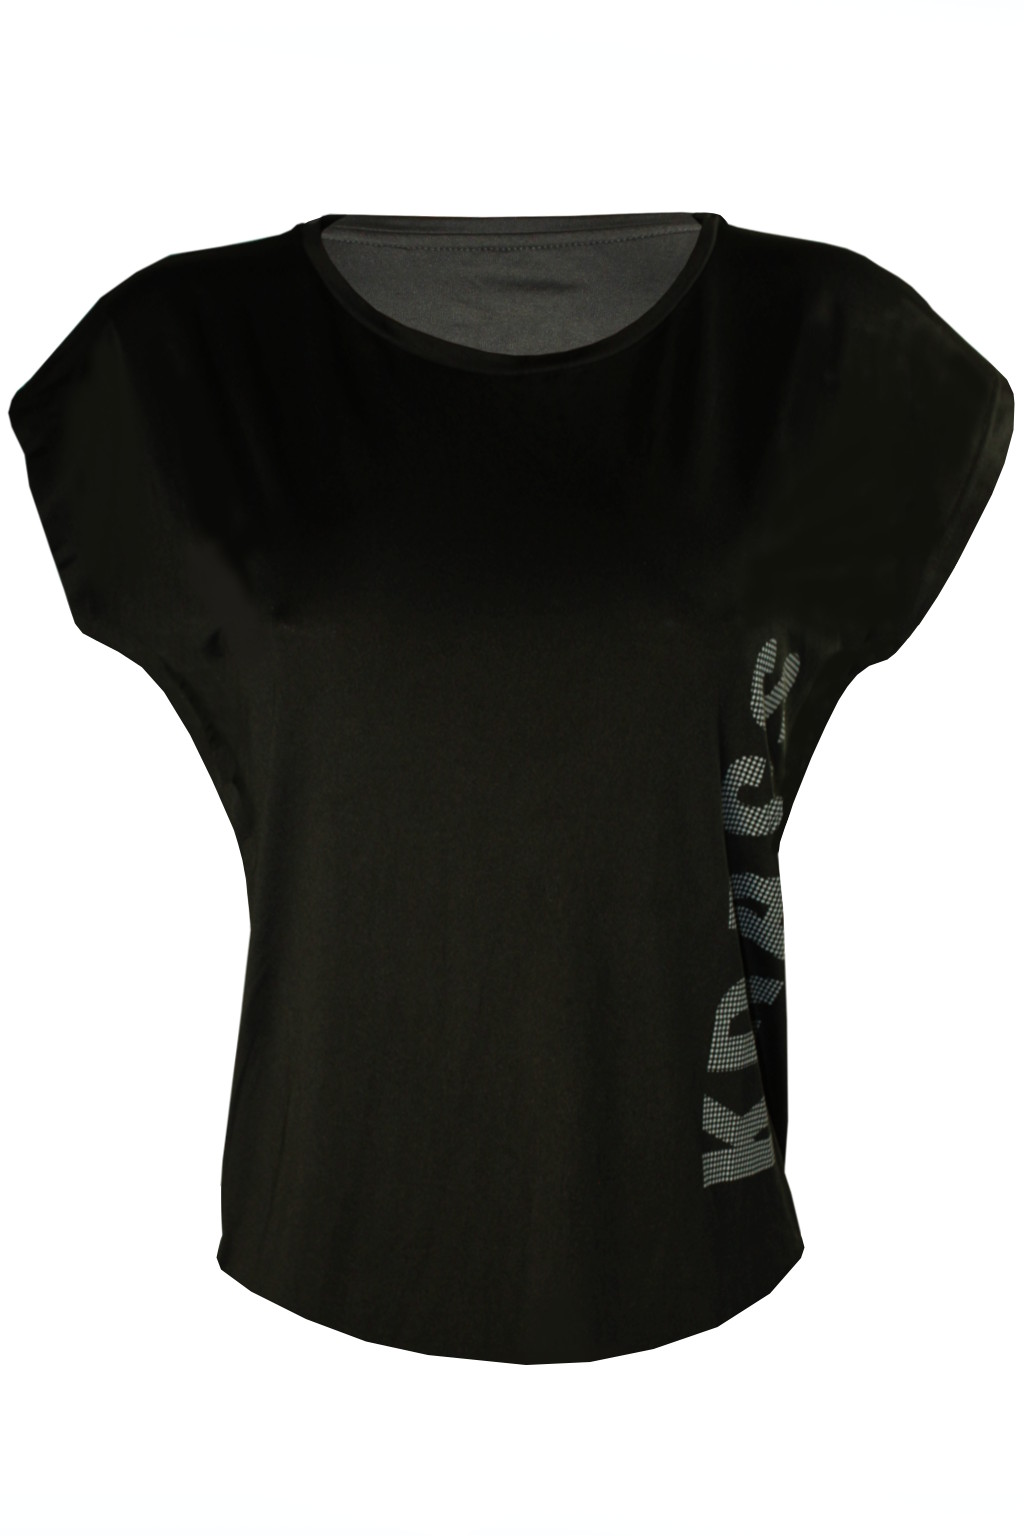 Fitness Krass Woman T-shirt XS černá